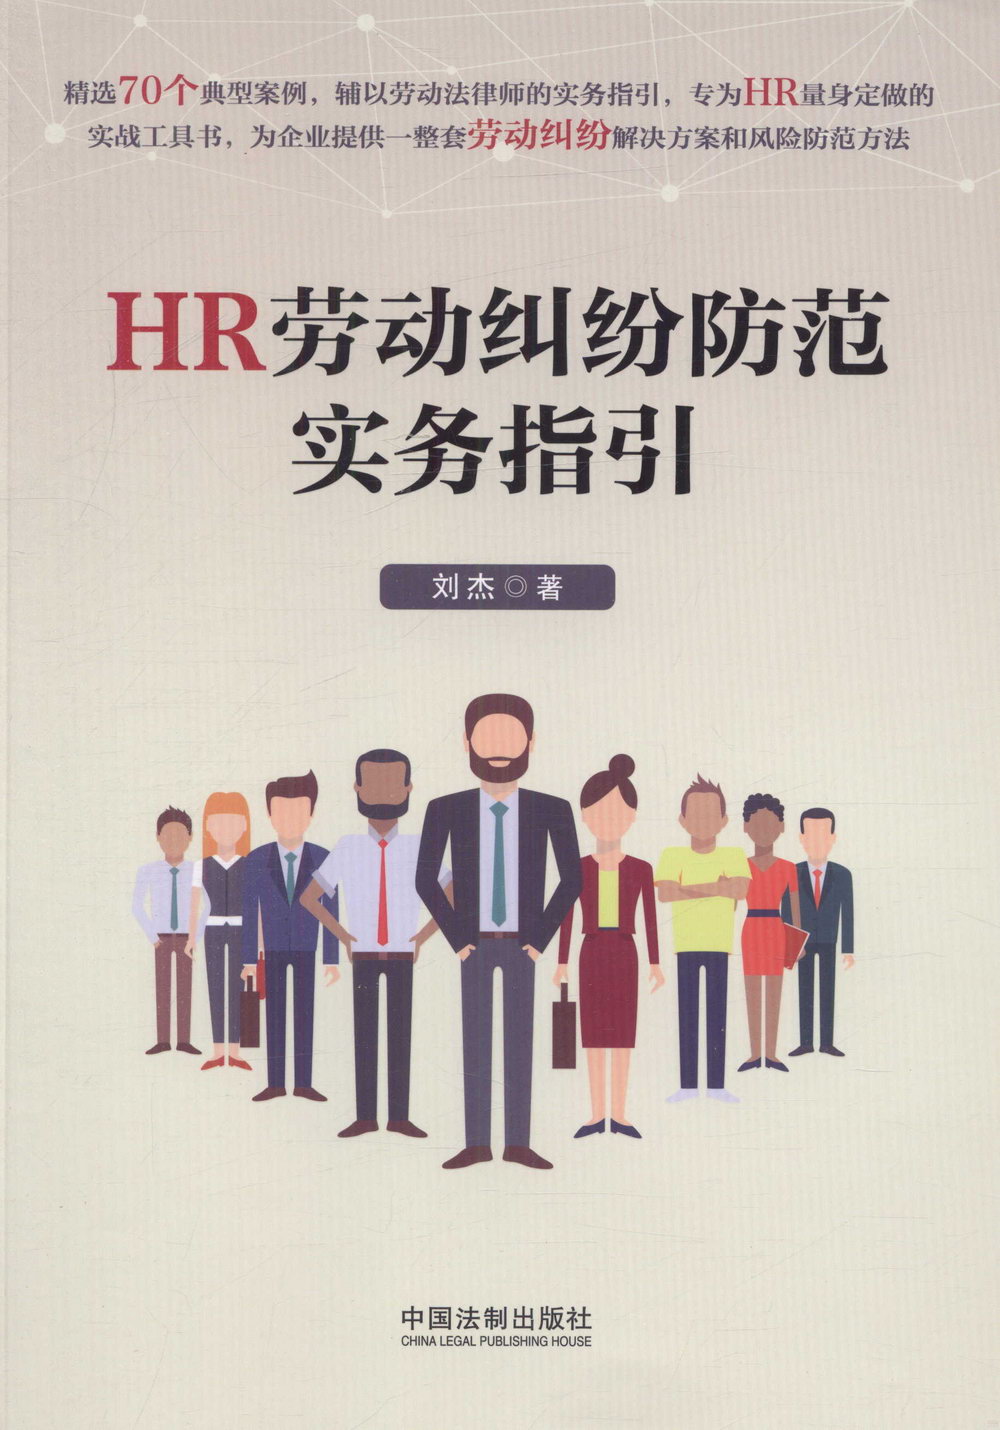 HR勞動糾紛防範實務指引